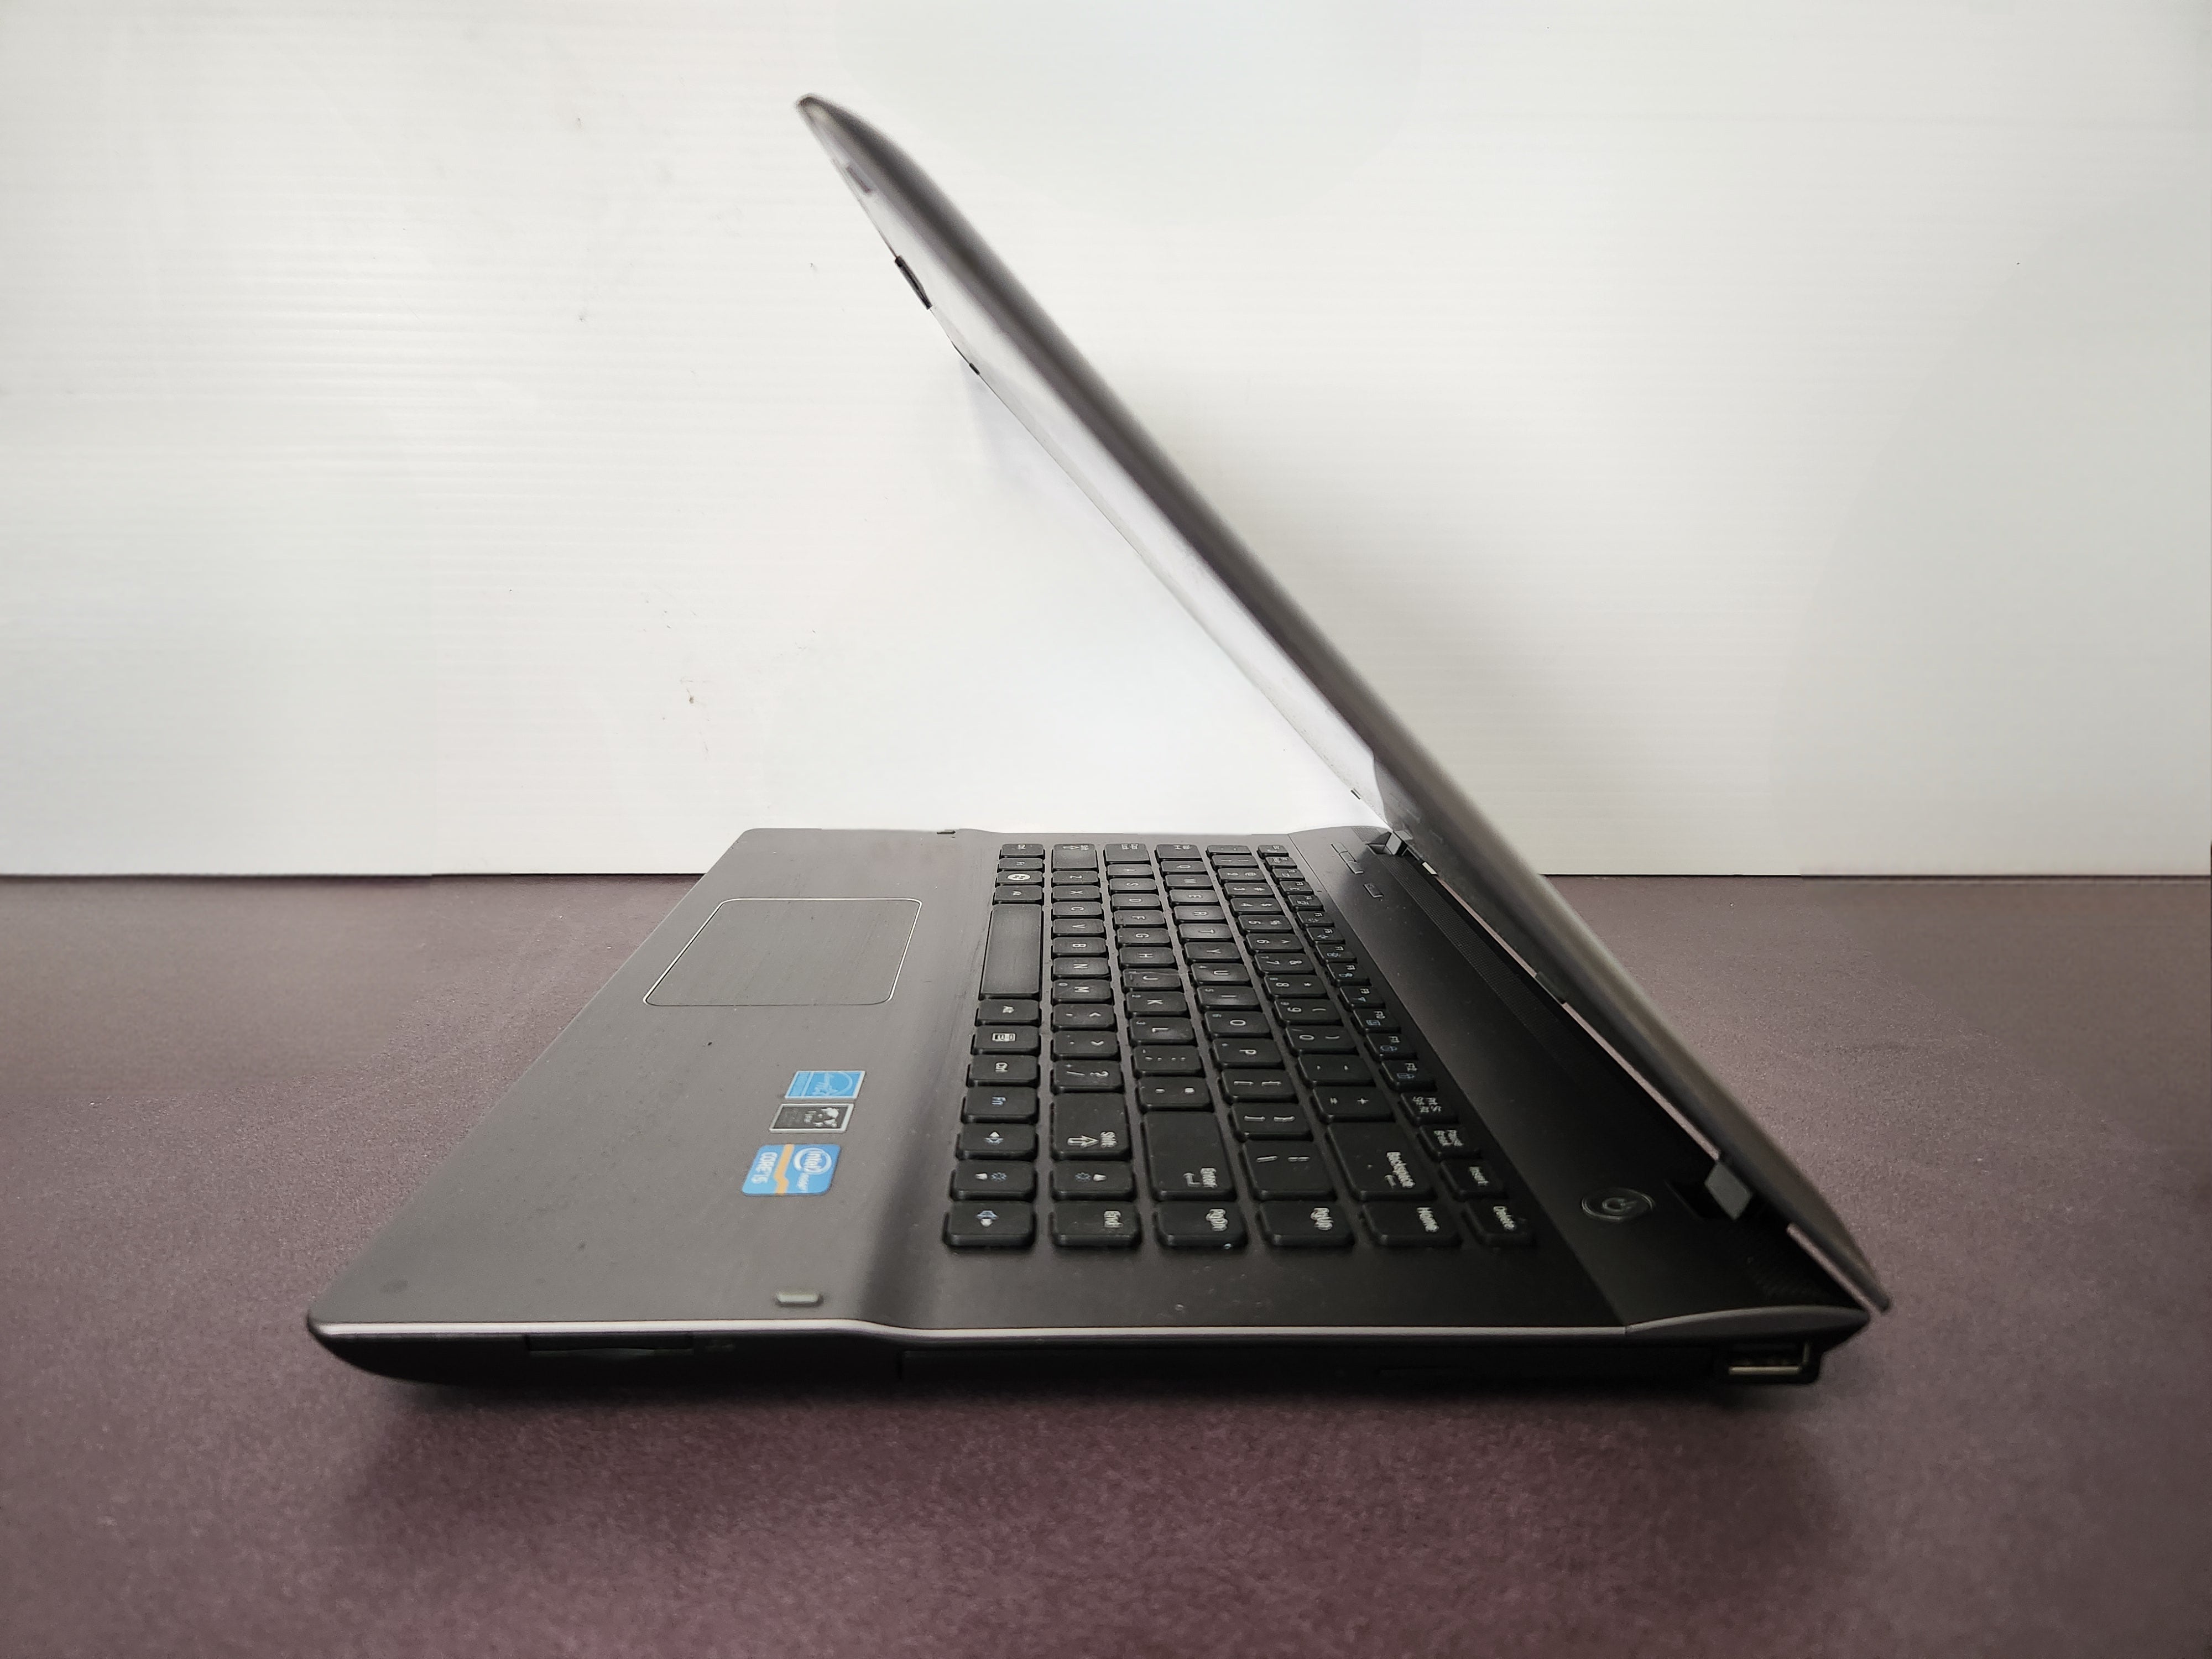 Samsung QX411 - Refurbished Laptop